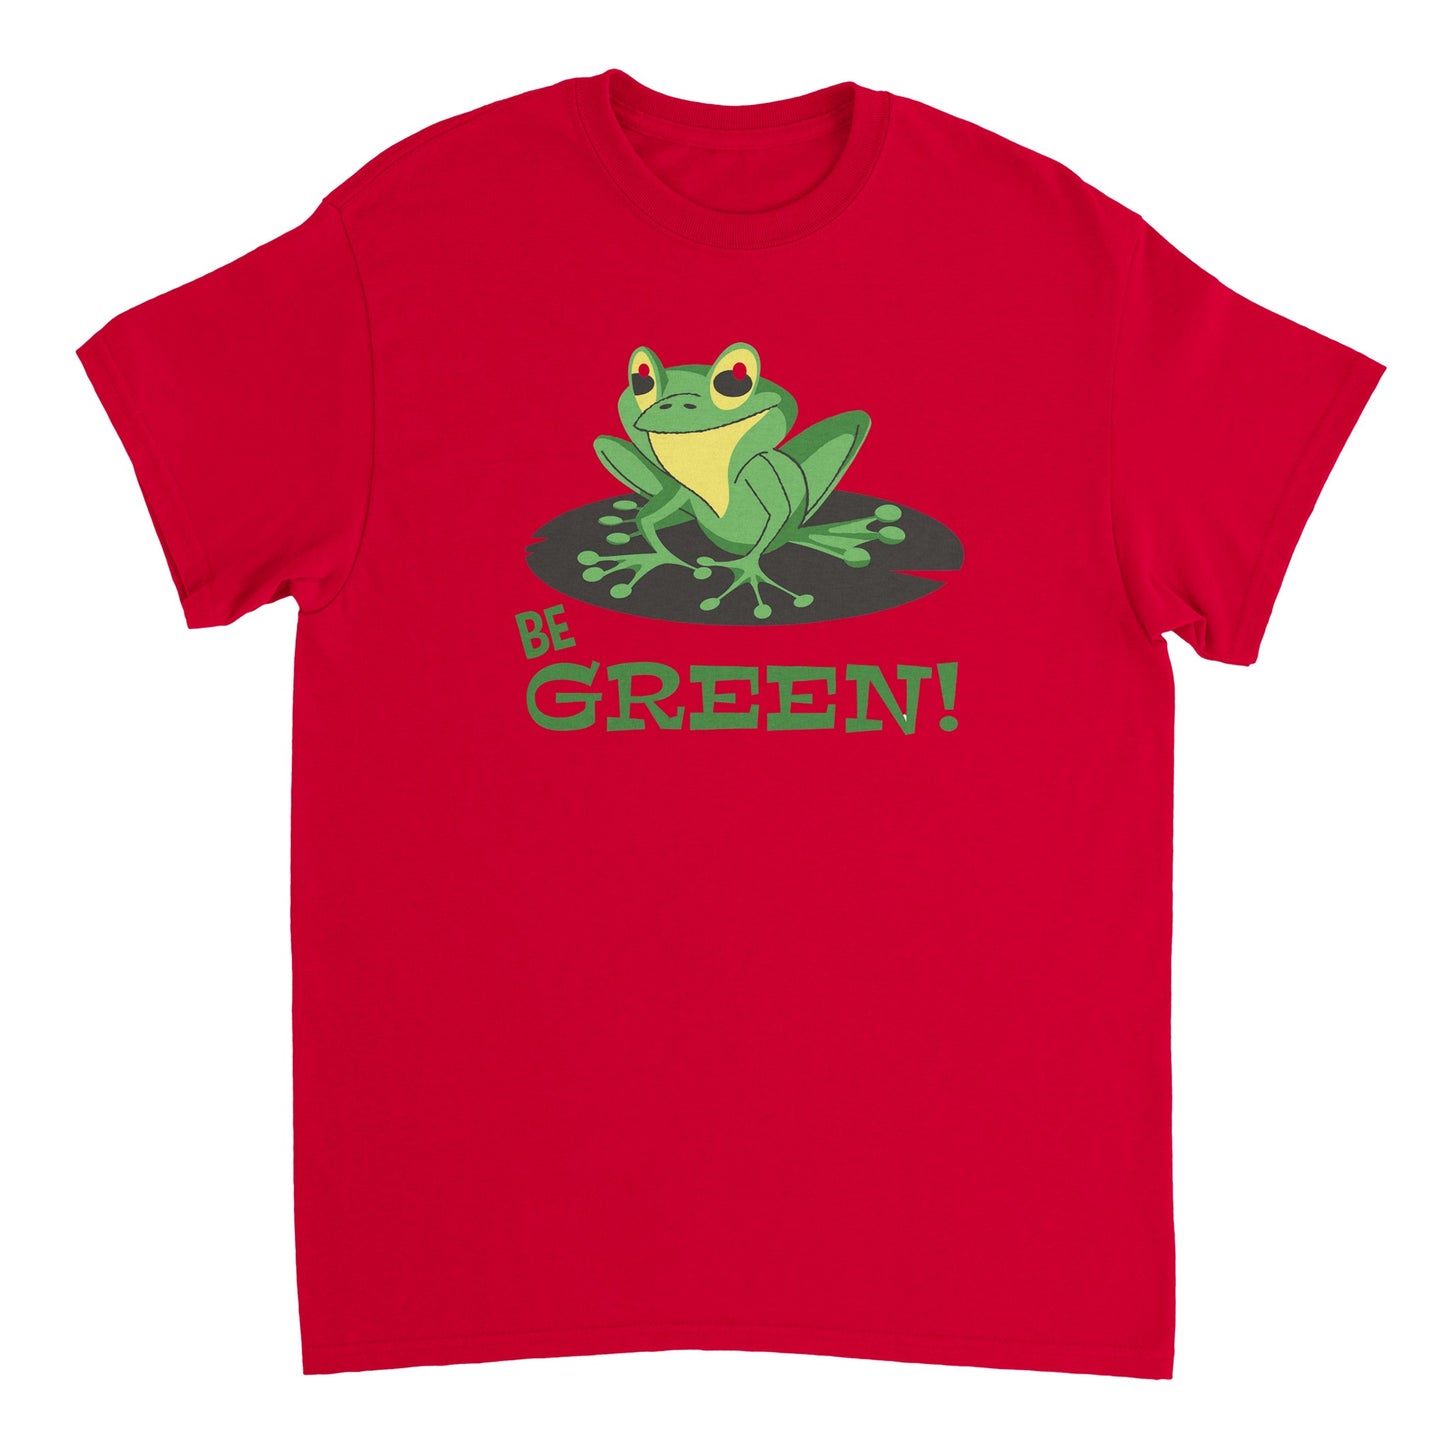 Be Green! T-shirt - Mister Snarky's